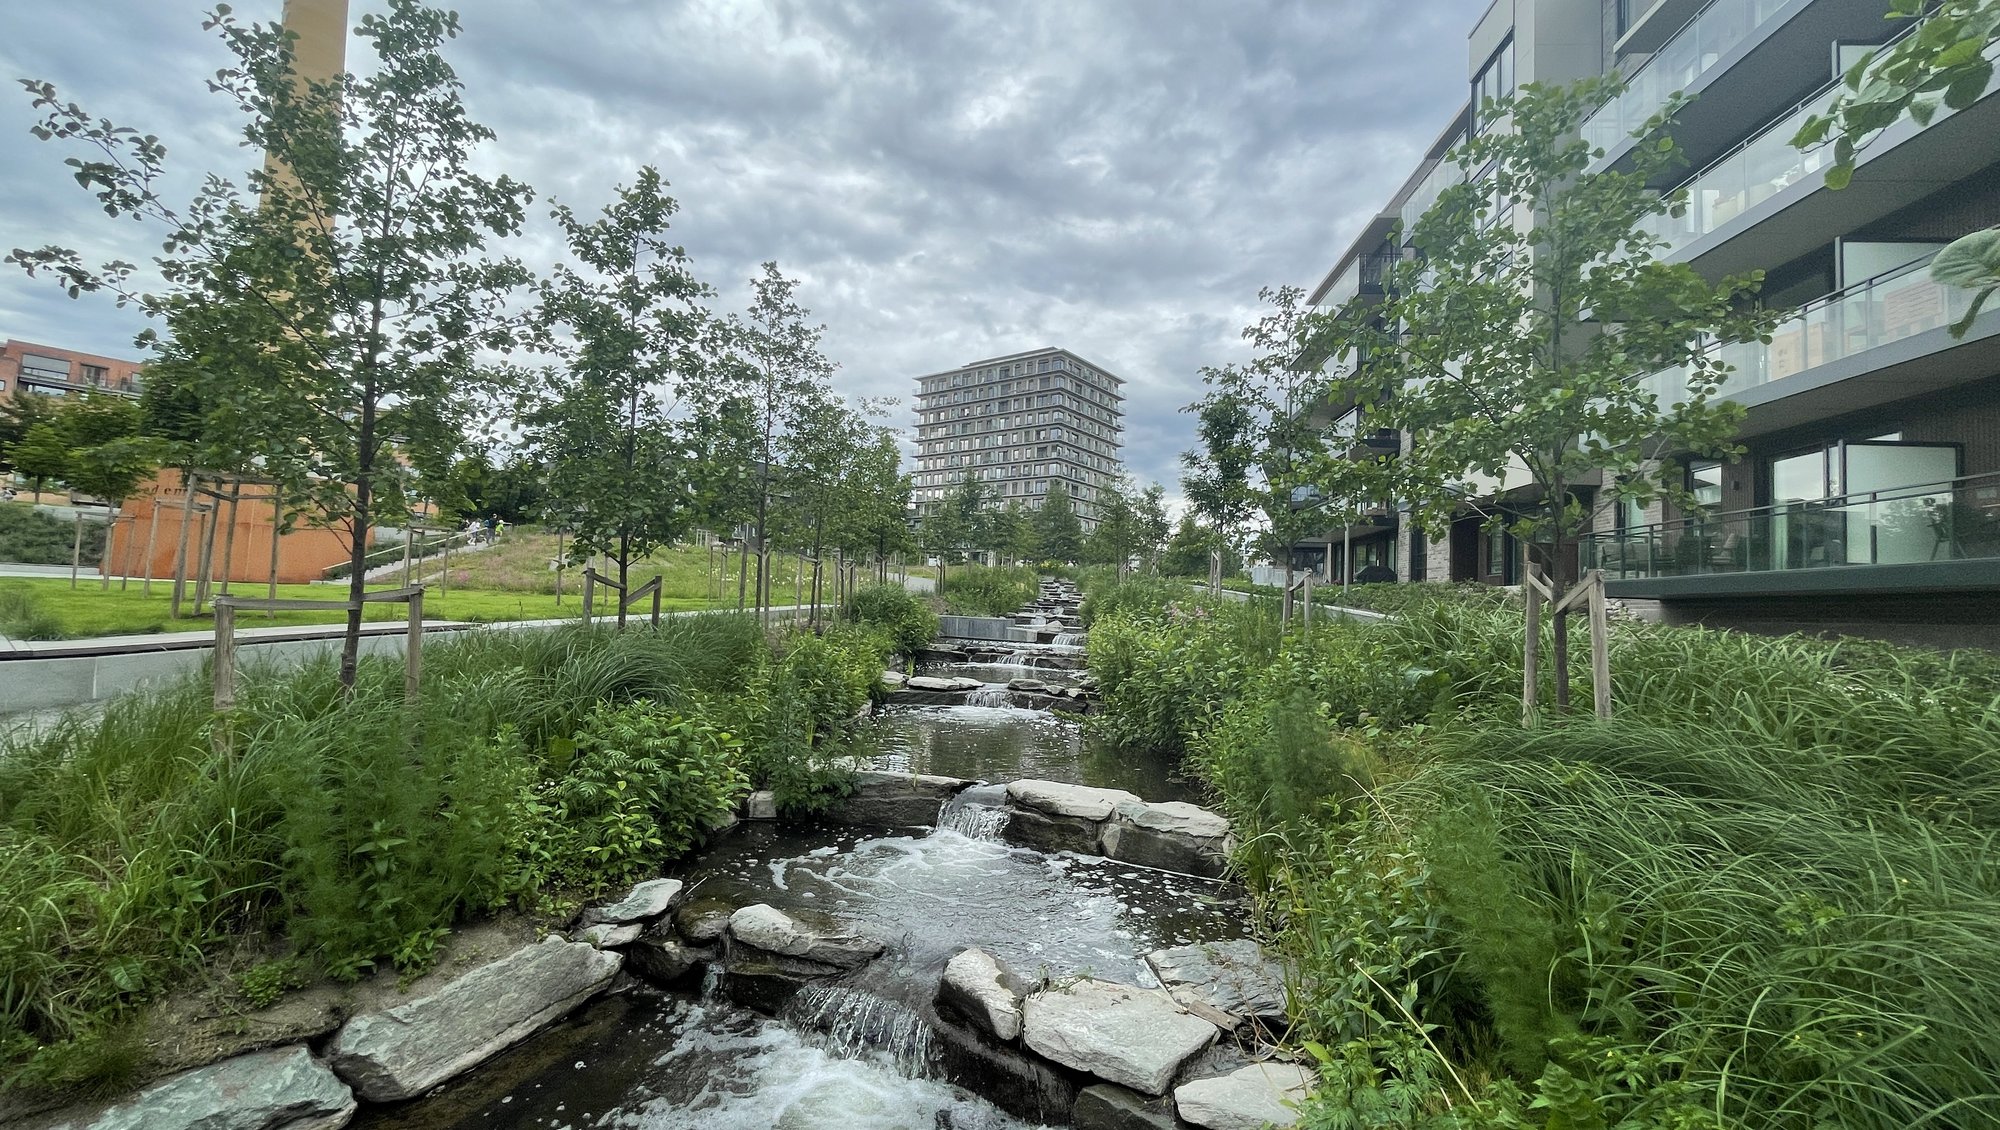 Park, vegetation and stream with apartment blocks around.